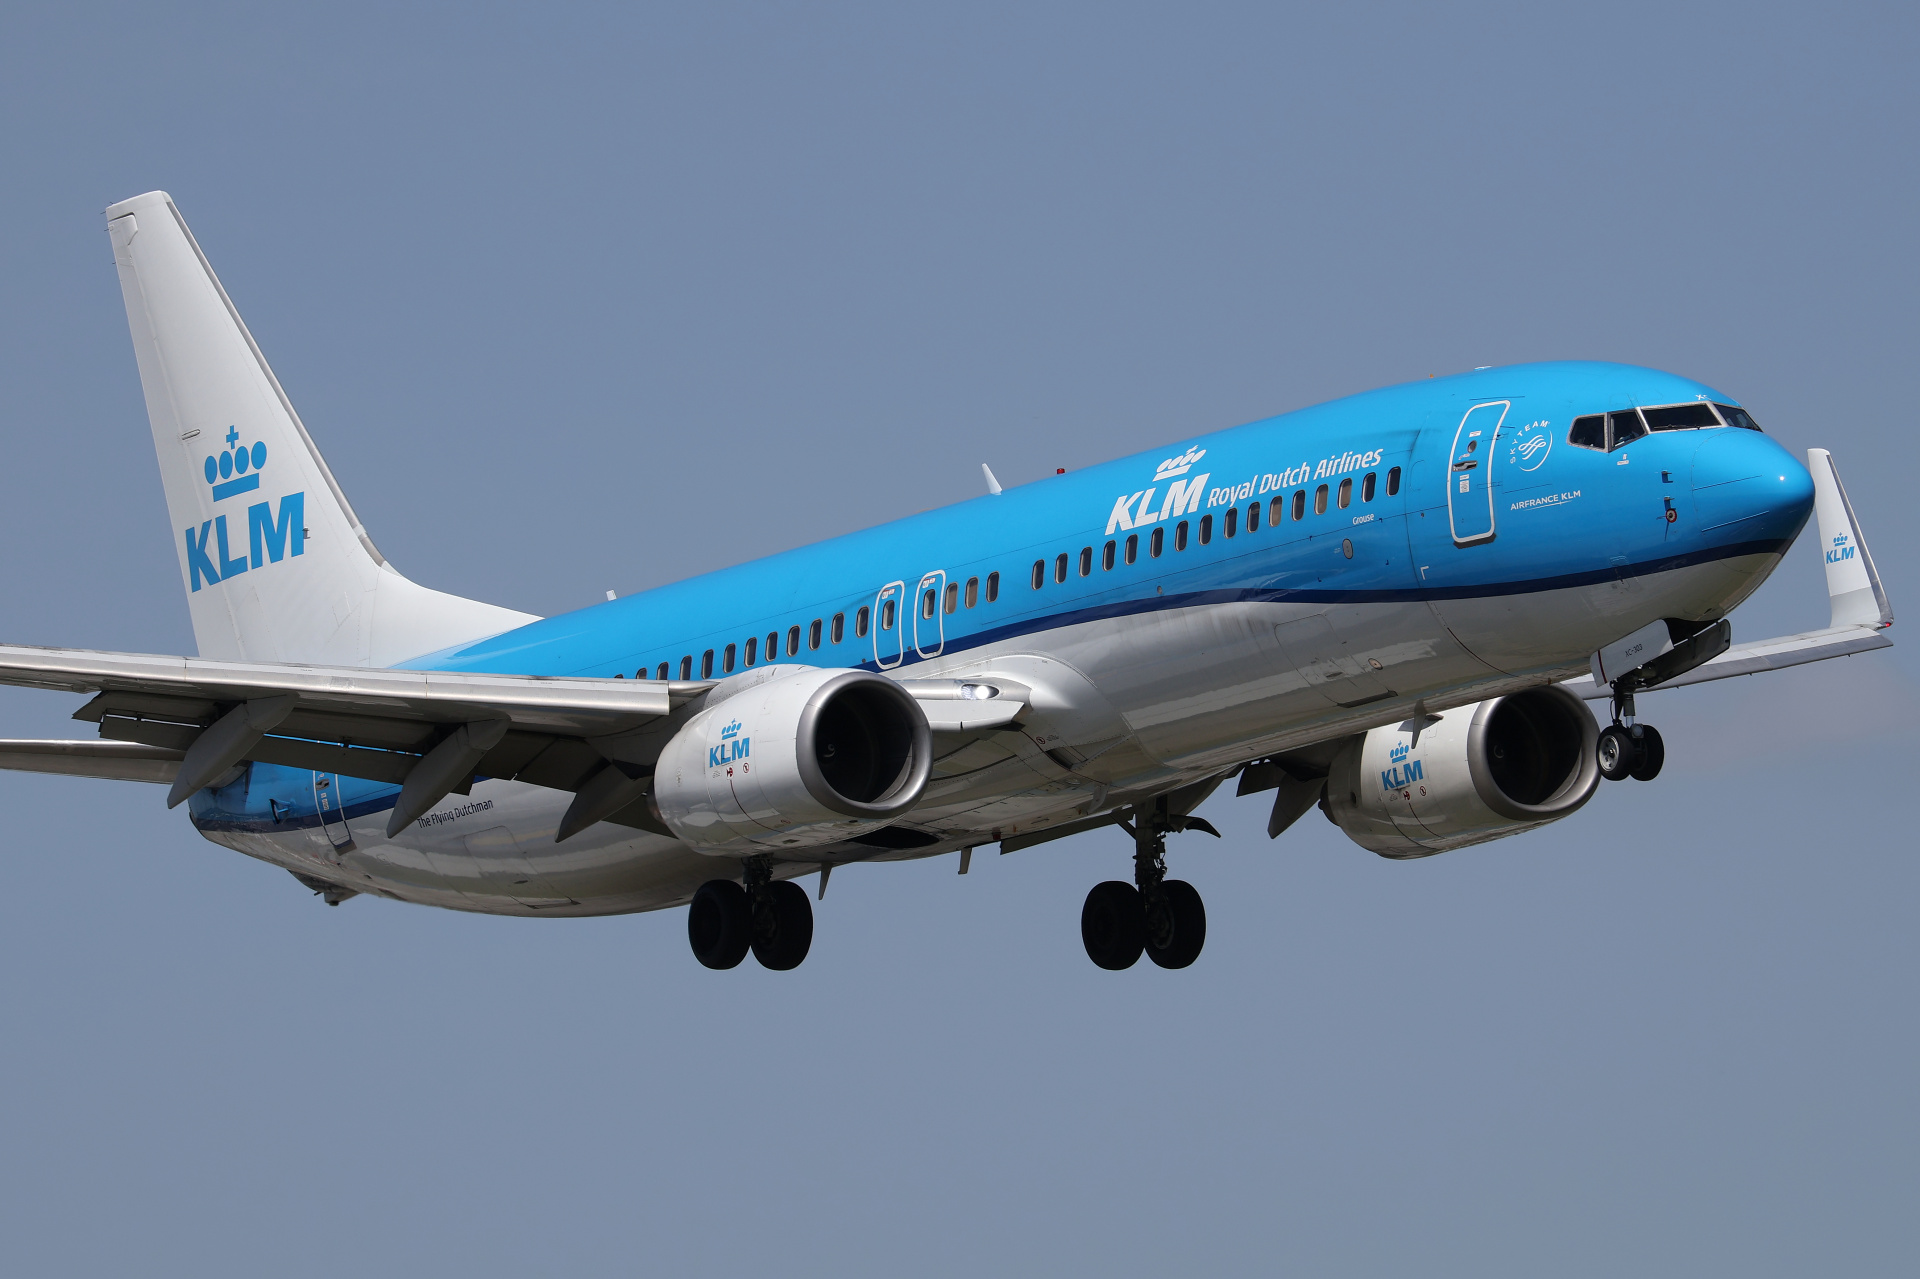 PH-BXC (Aircraft » EPWA Spotting » Boeing 737-800 » KLM Royal Dutch Airlines)